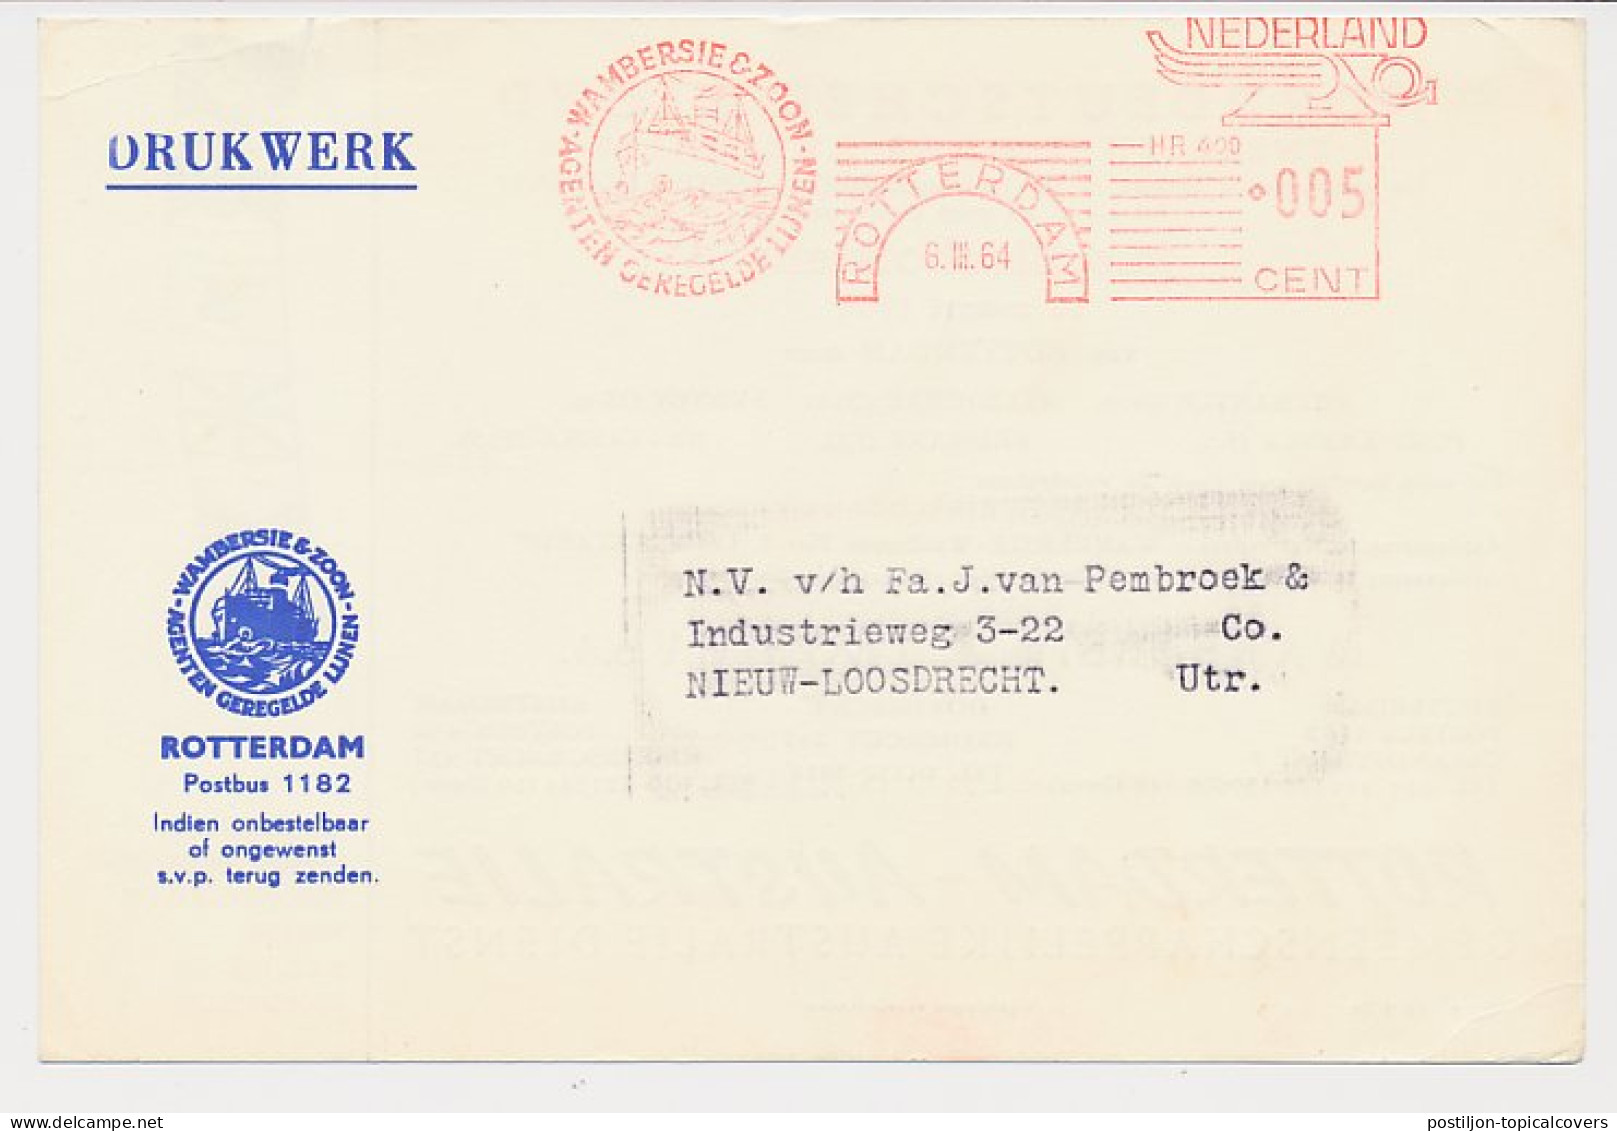 Meter Card Netherlands 1964 Shipping Company Wambersie - Sailing List Rotterdam - Australia - Barcos